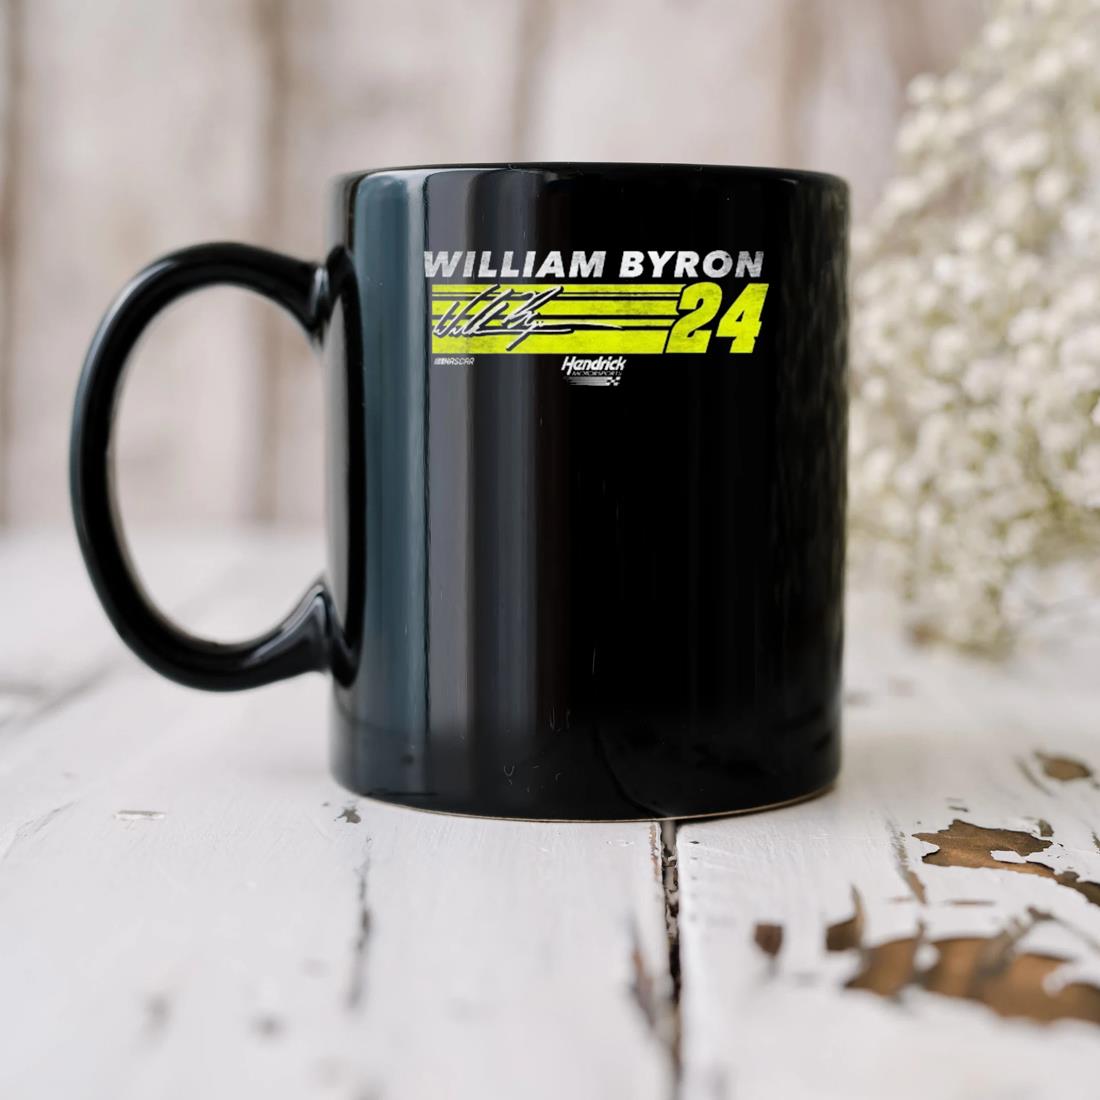 William Byron Richard Childress Racing Team Collection Hot Lap Mug